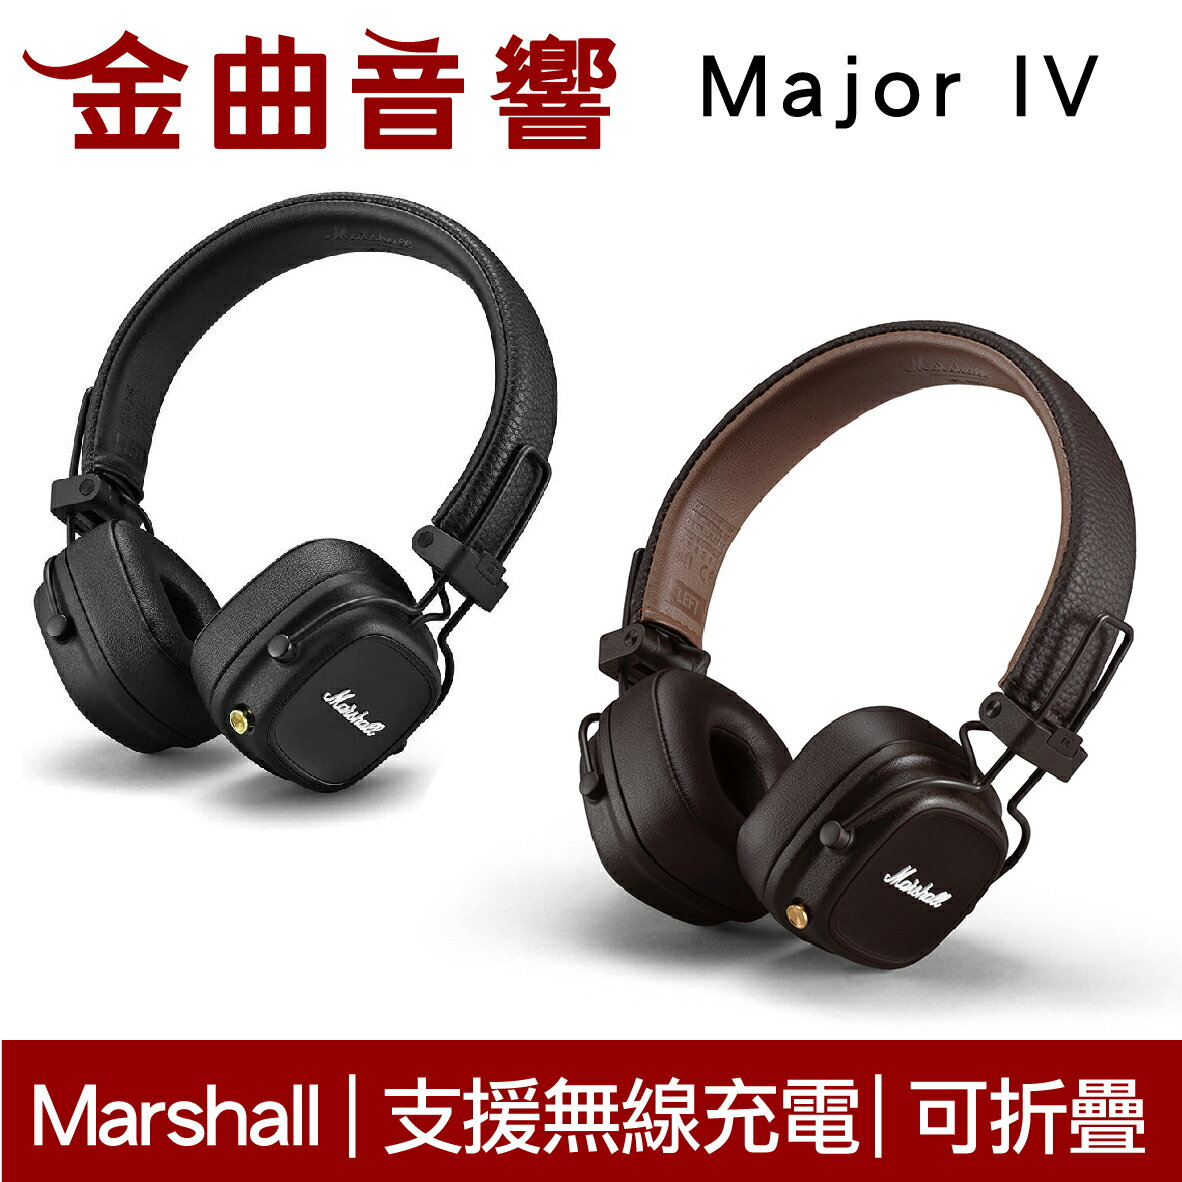 Marshall 馬歇爾 Major IV 兒童耳機 大人 皆適用 可折疊 超強續航力 藍芽 耳罩式 耳機 | 金曲音響